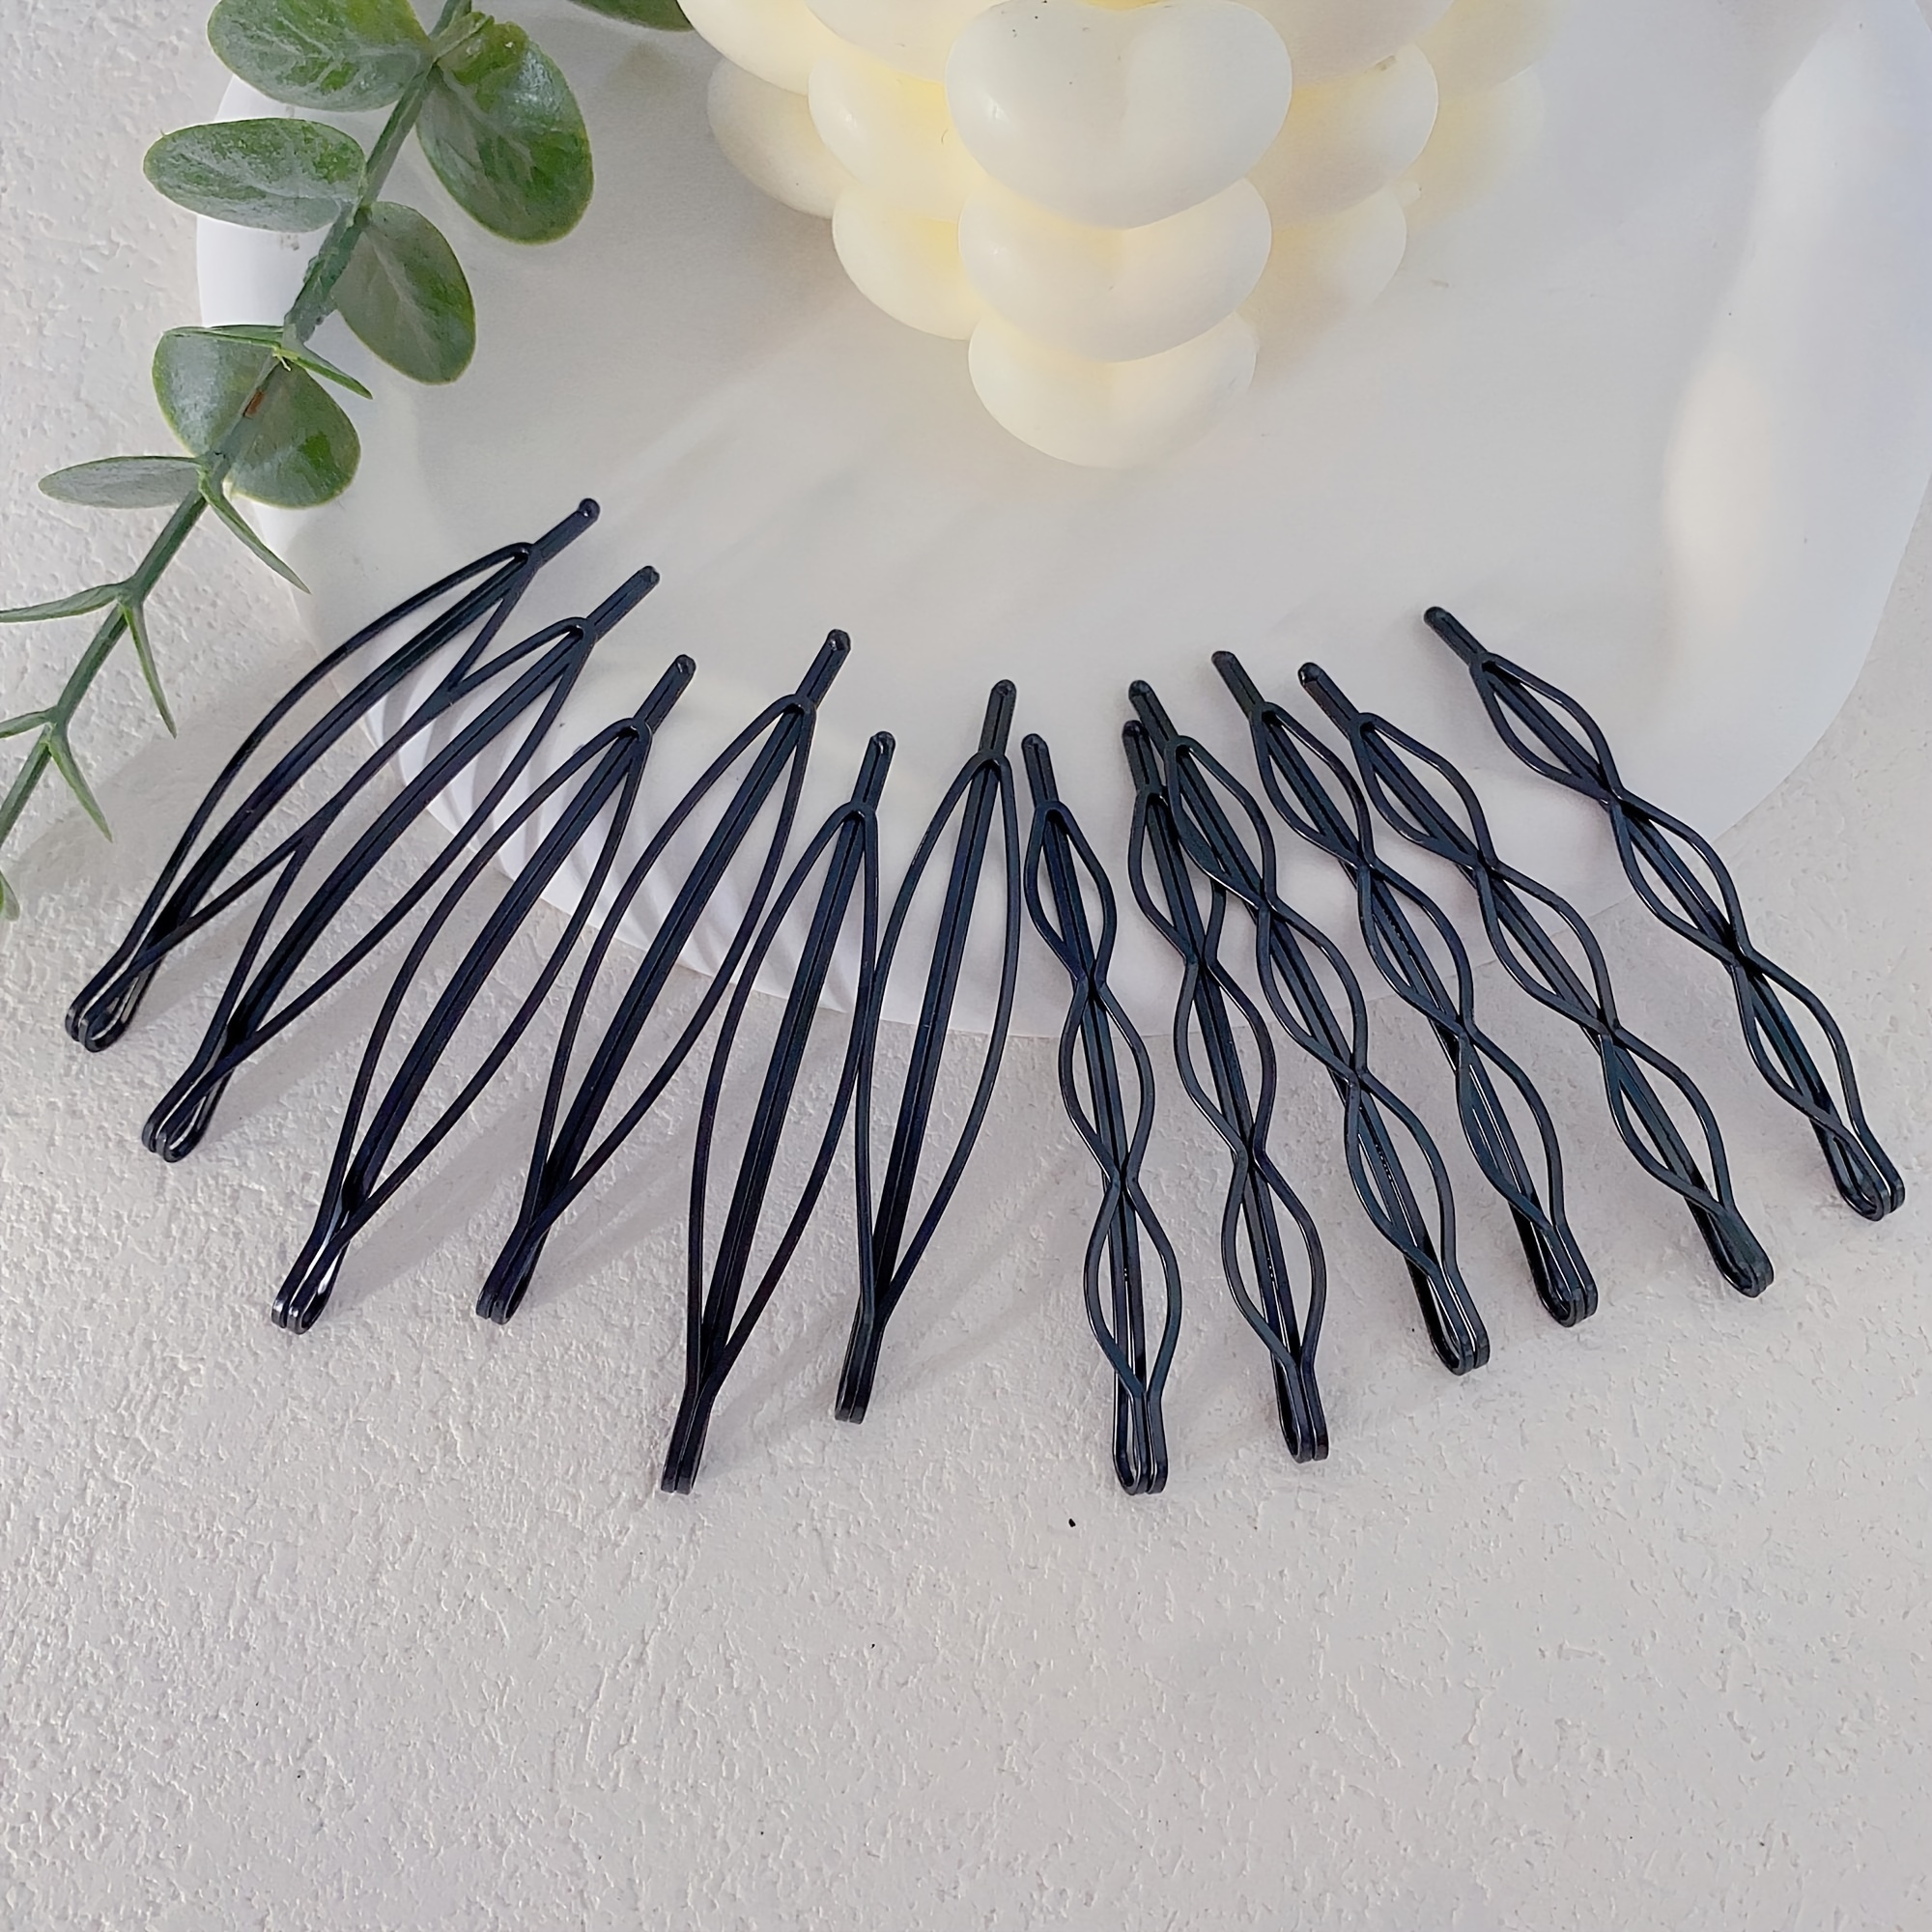 

Hair Pins Bobby Pins Bangs Clips Hair Accessories Hair Styling Tool For Women Girls